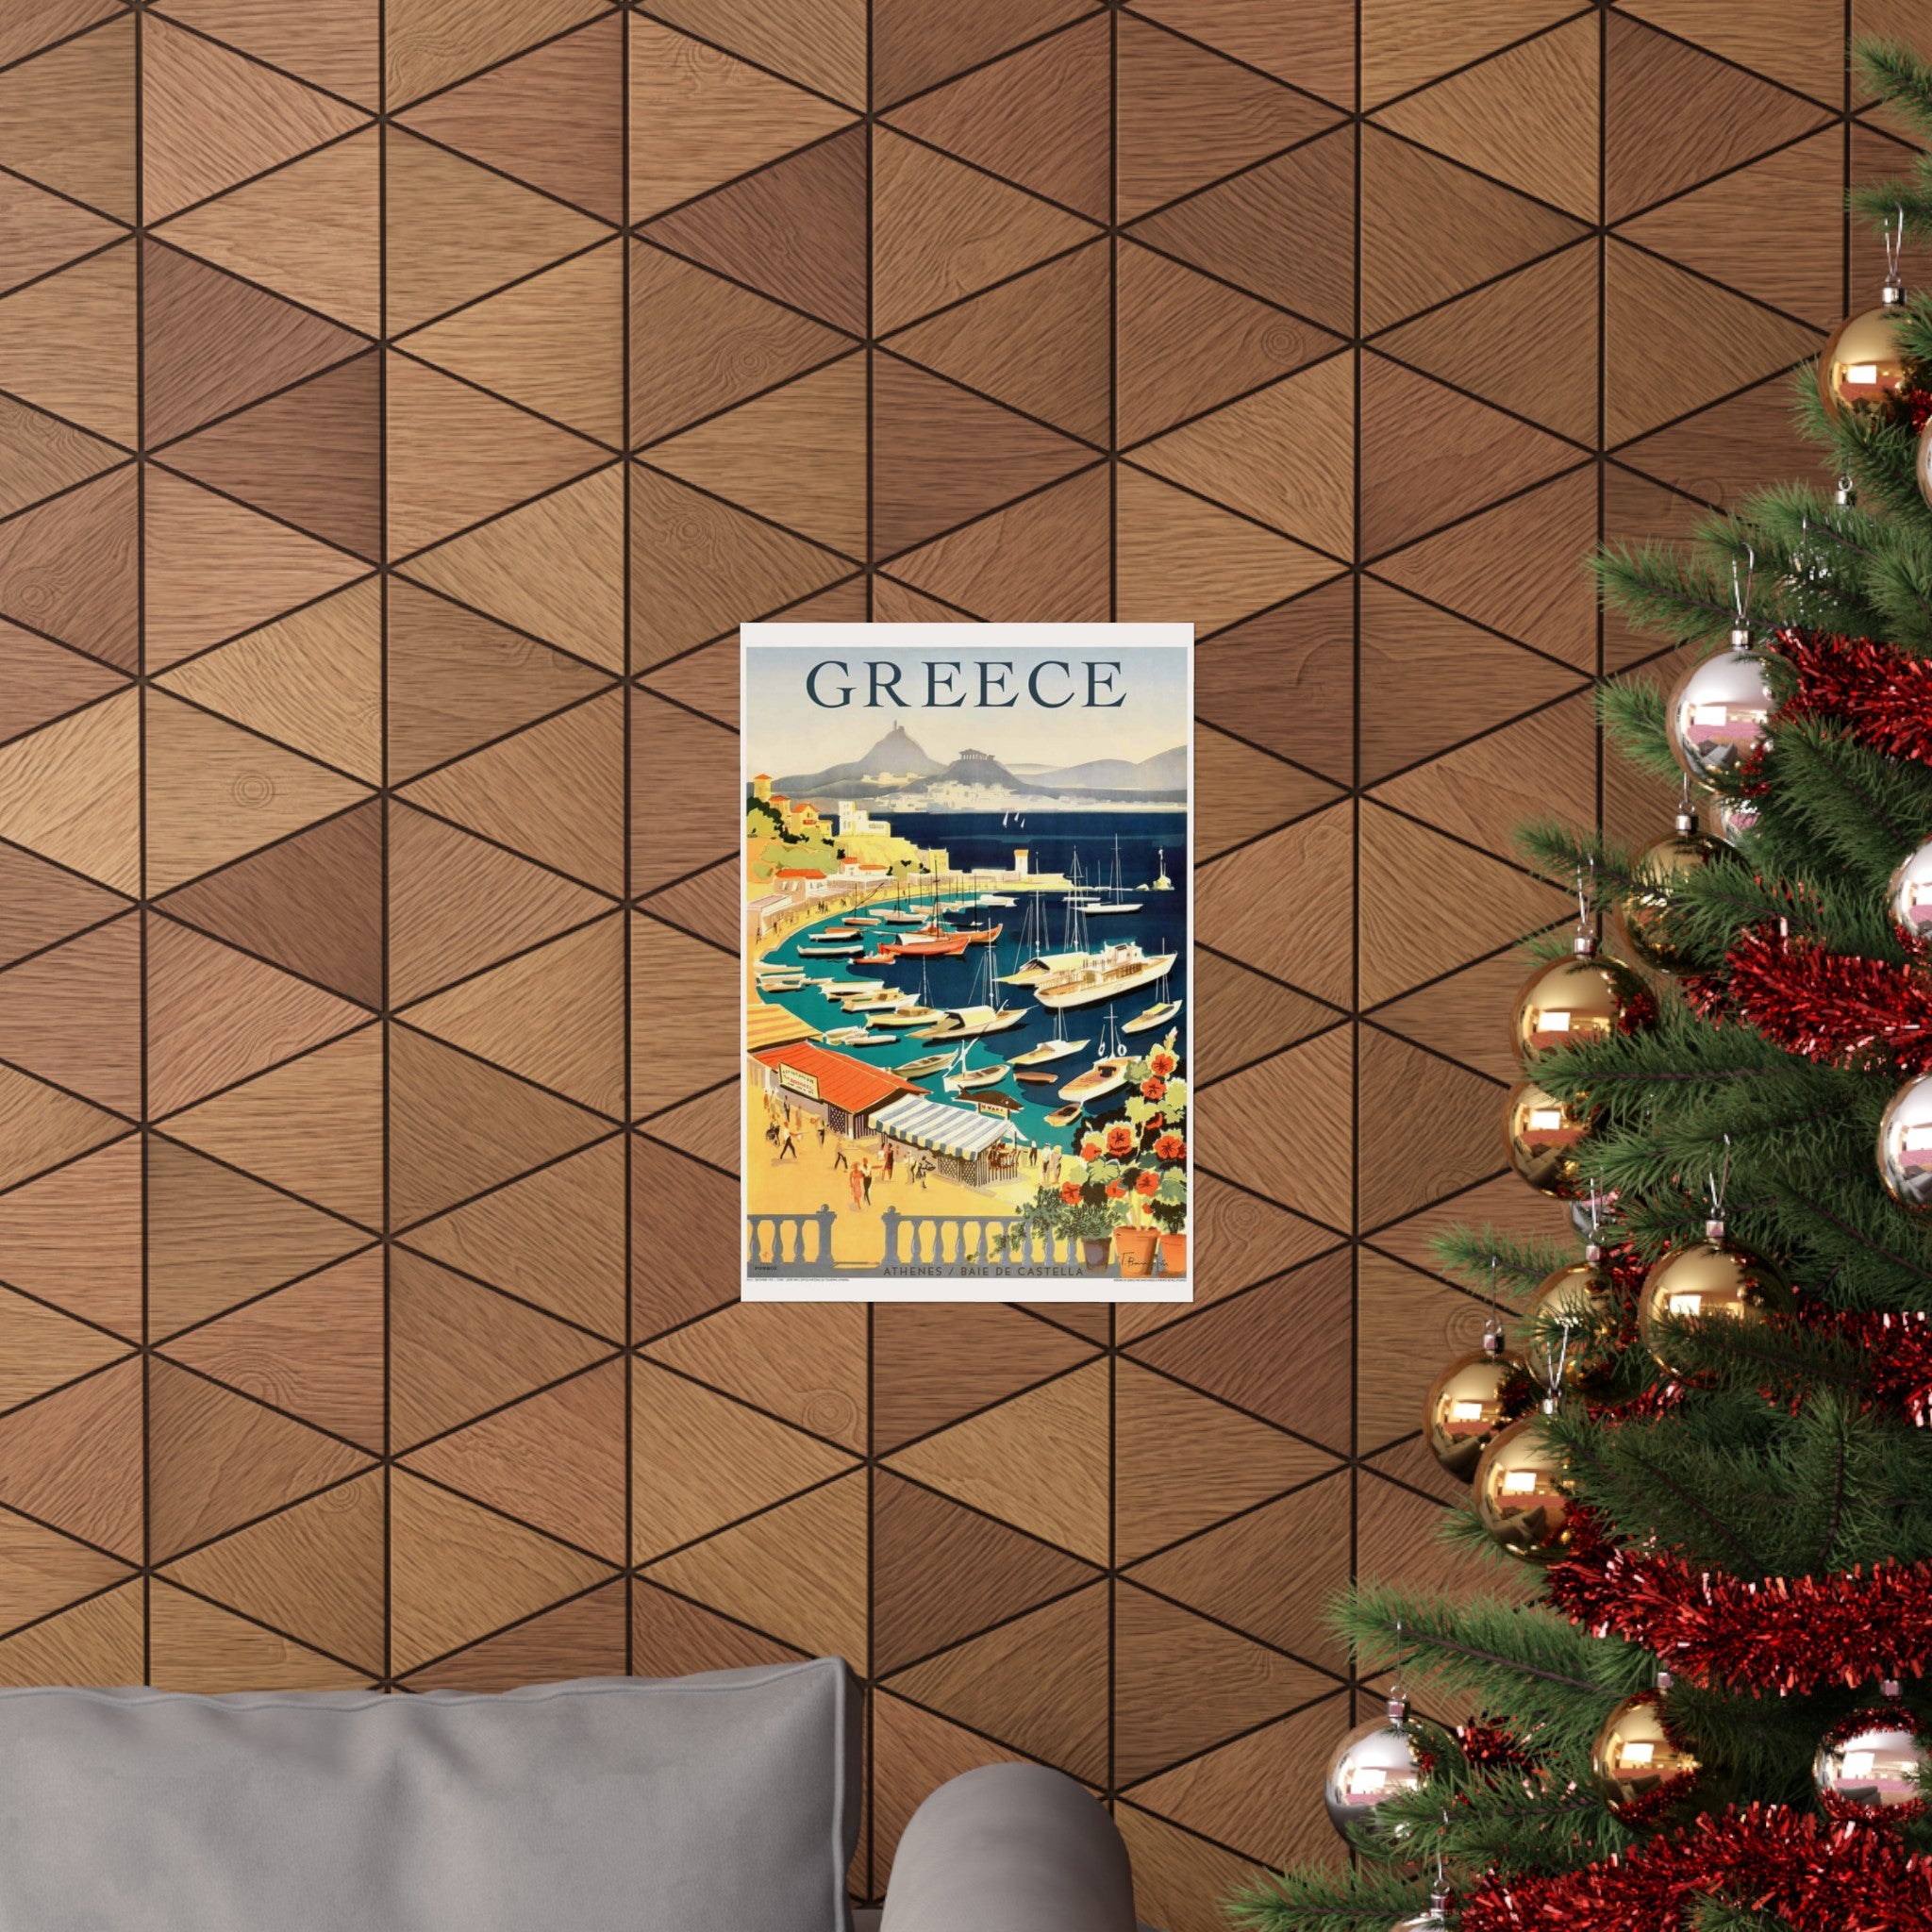 Athens Greece Wall Print | Poster | Travel | Retro Advertising | Tourism